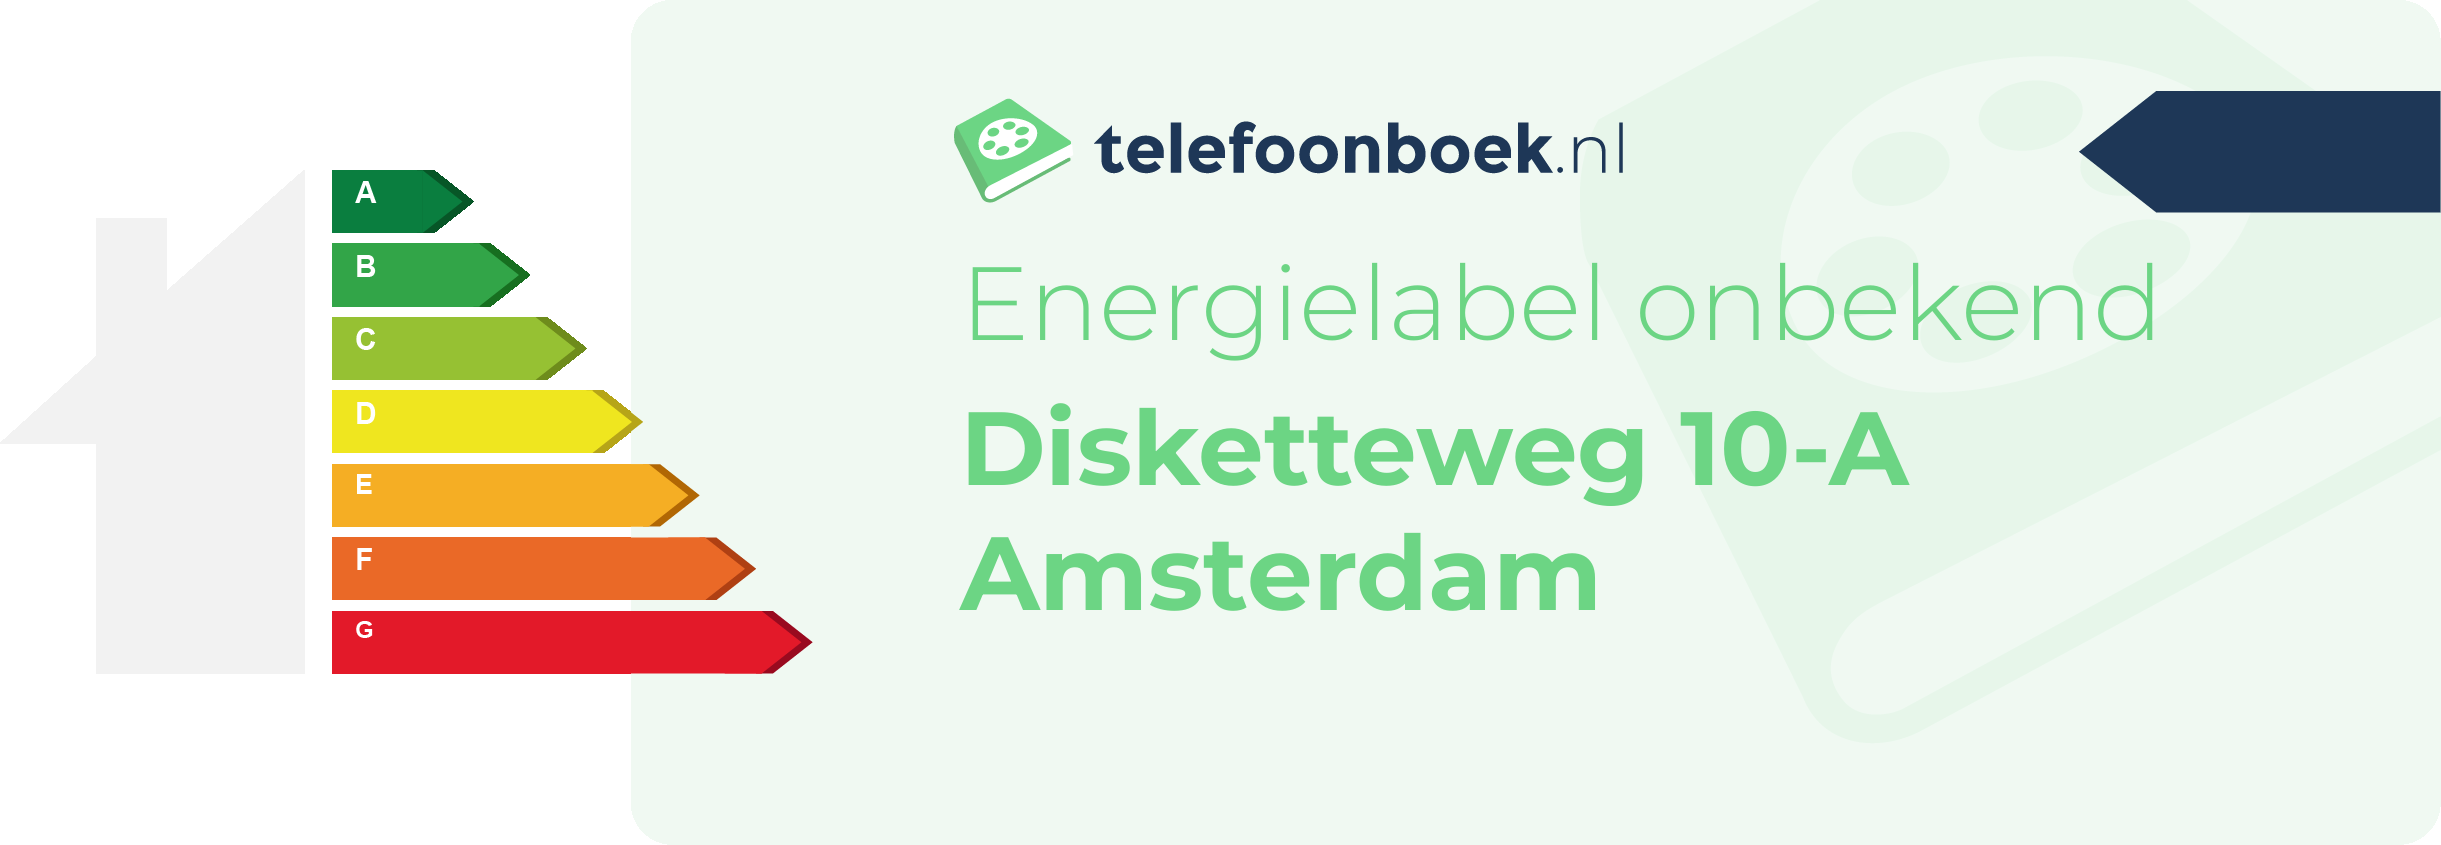 Energielabel Disketteweg 10-A Amsterdam